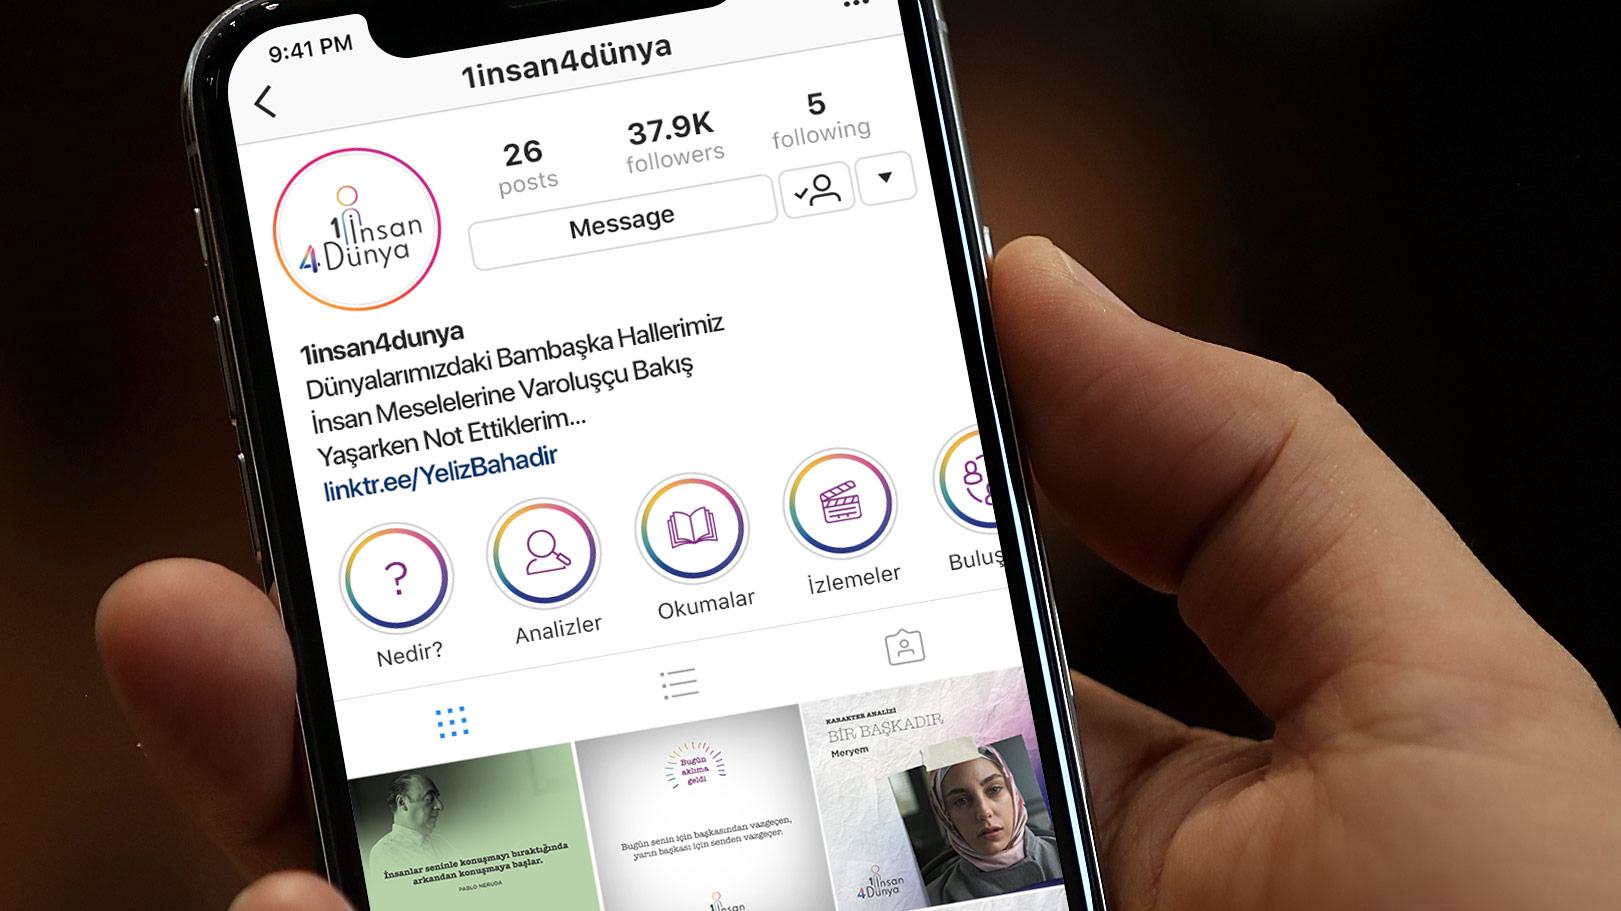 1İnsan4Dünya <br> Instagram Account Consultancy